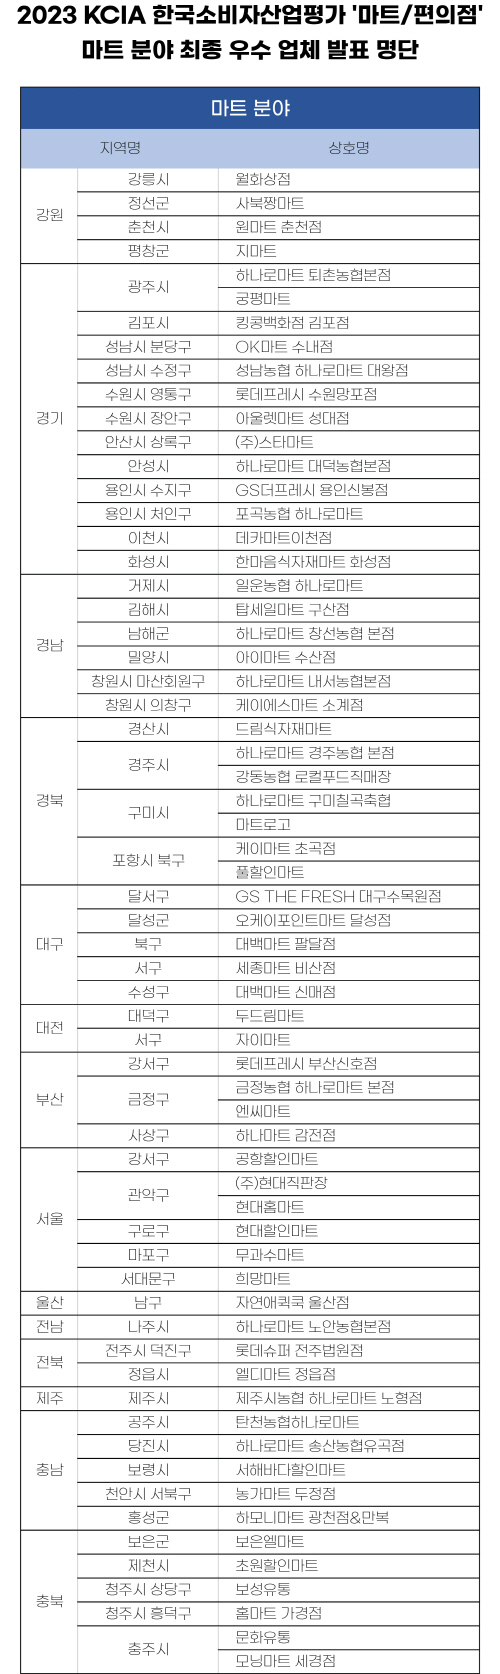 KCA한국소비자평가, 2023 KCIA 한국소비자산업평가 ‘마트/편의점’ 마트 분야 우수 업체 발표